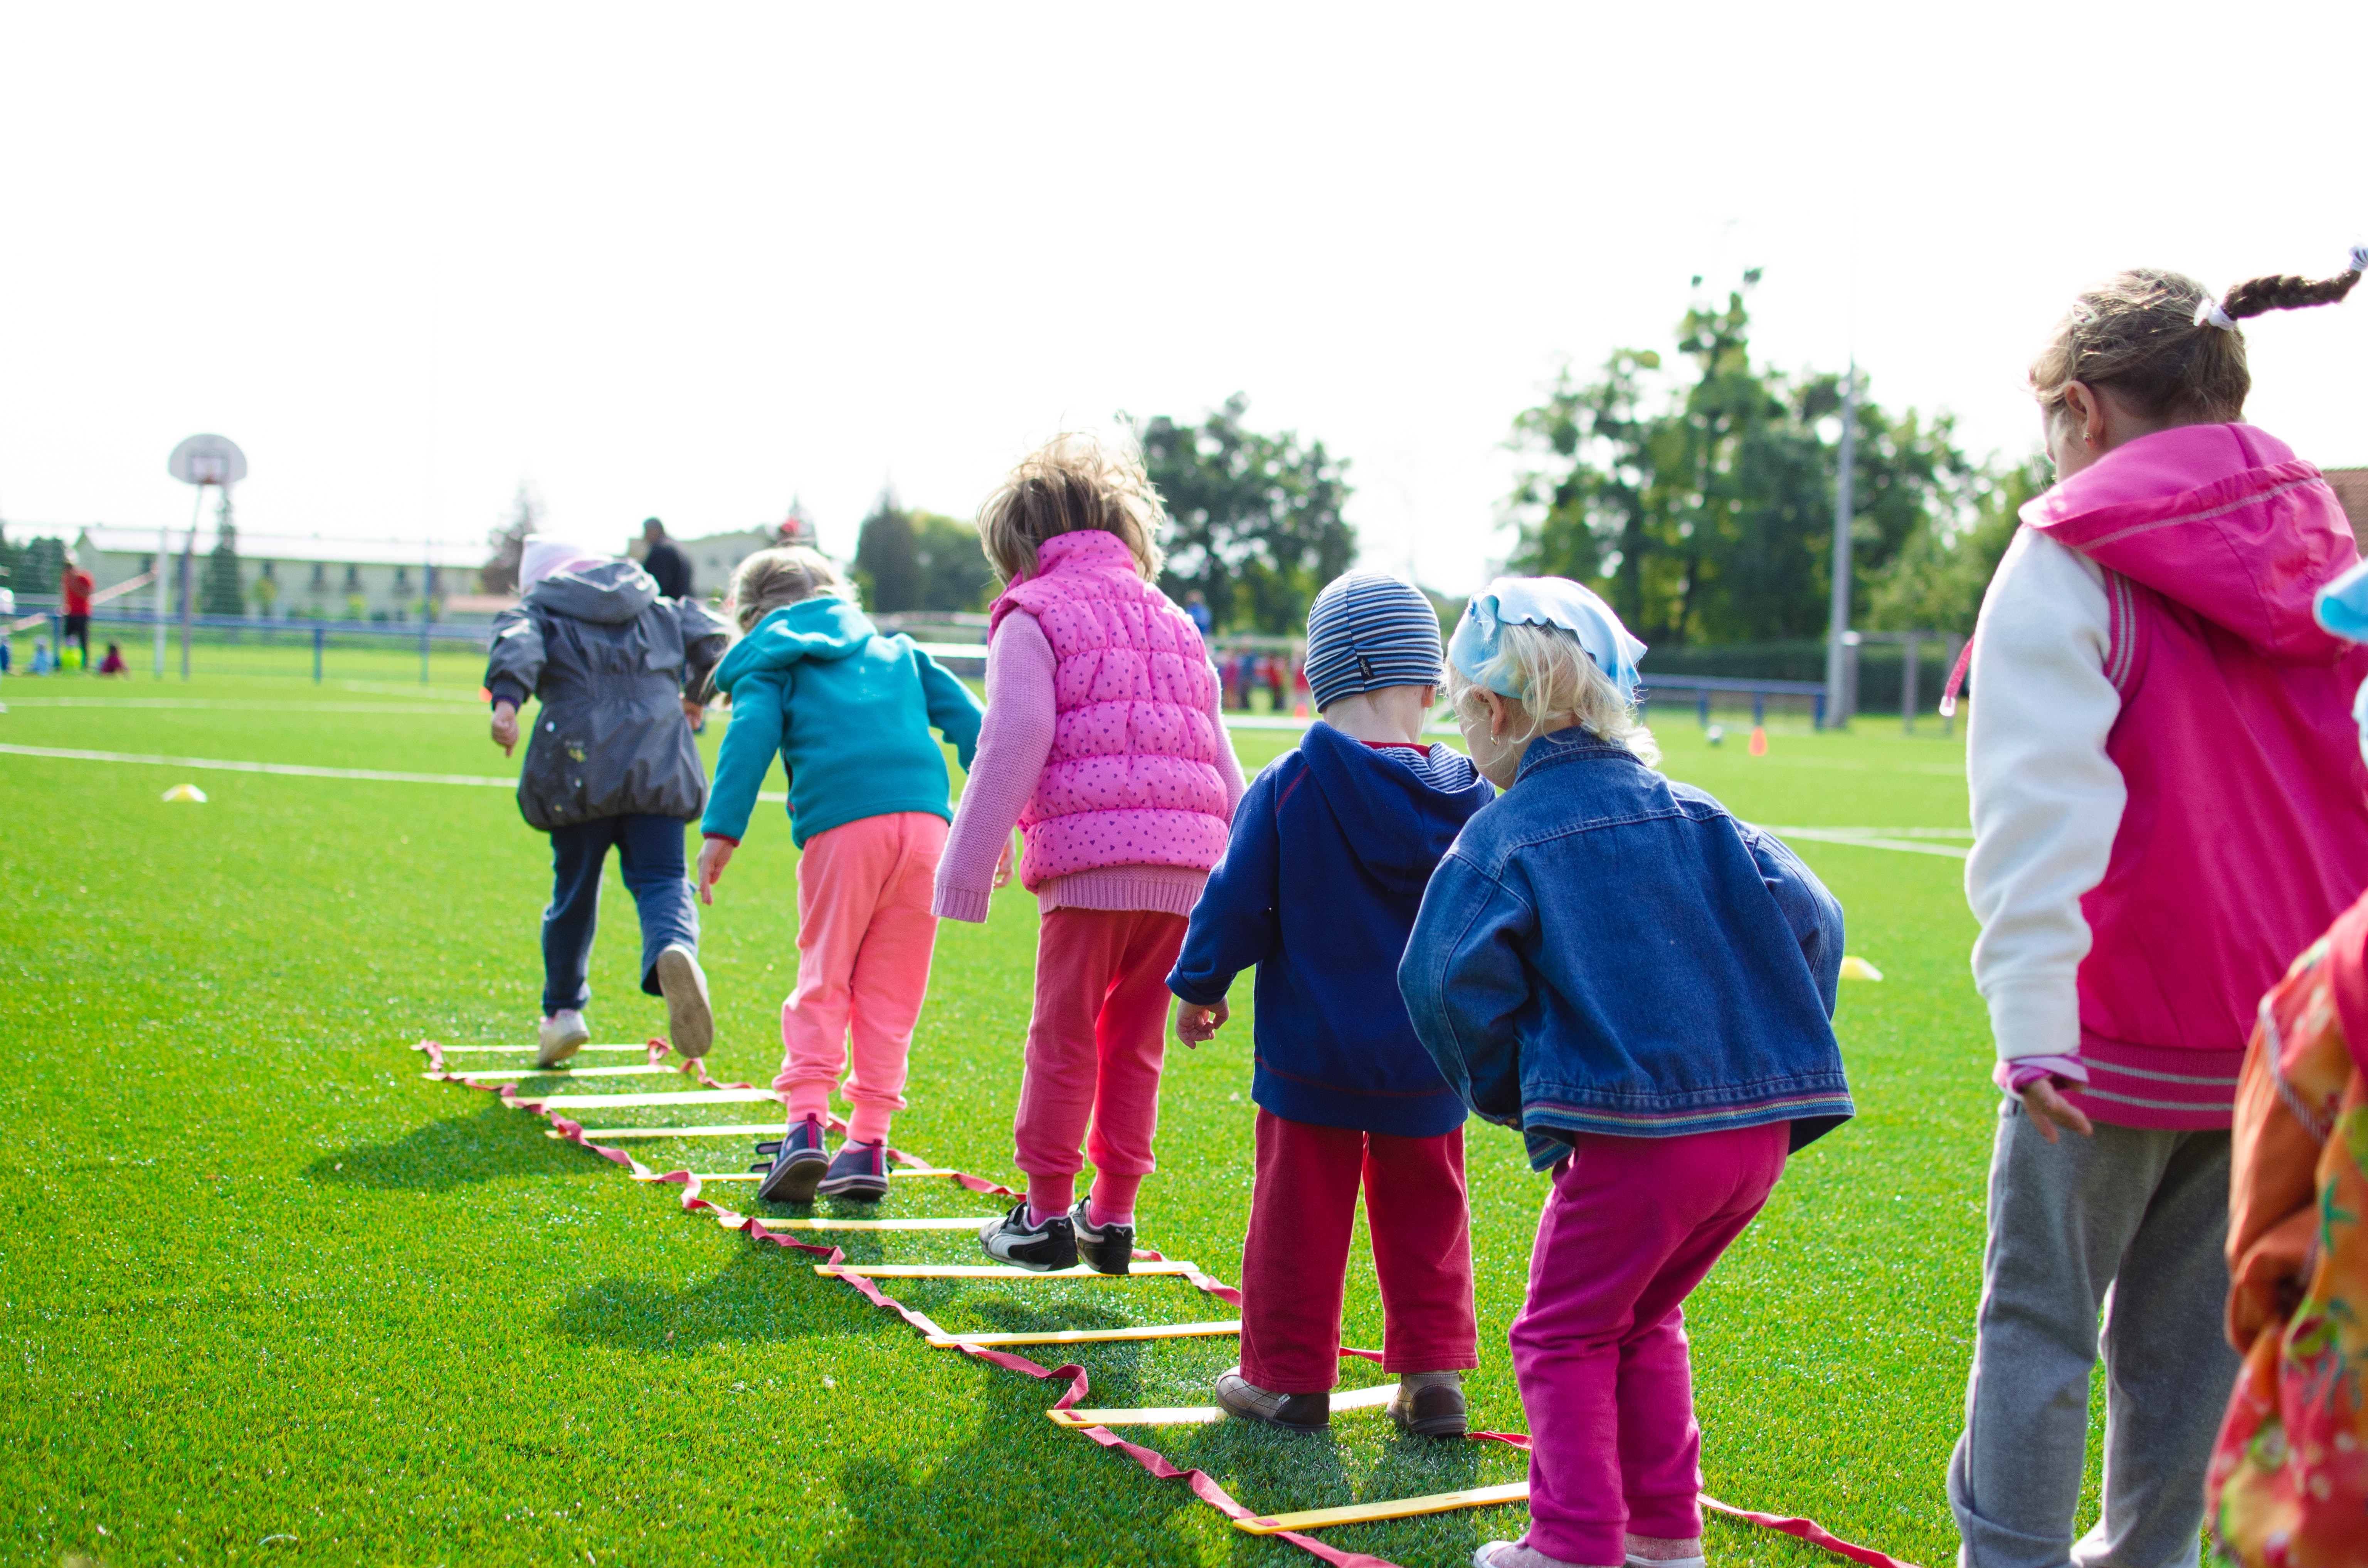 Children exercising using agility ladders